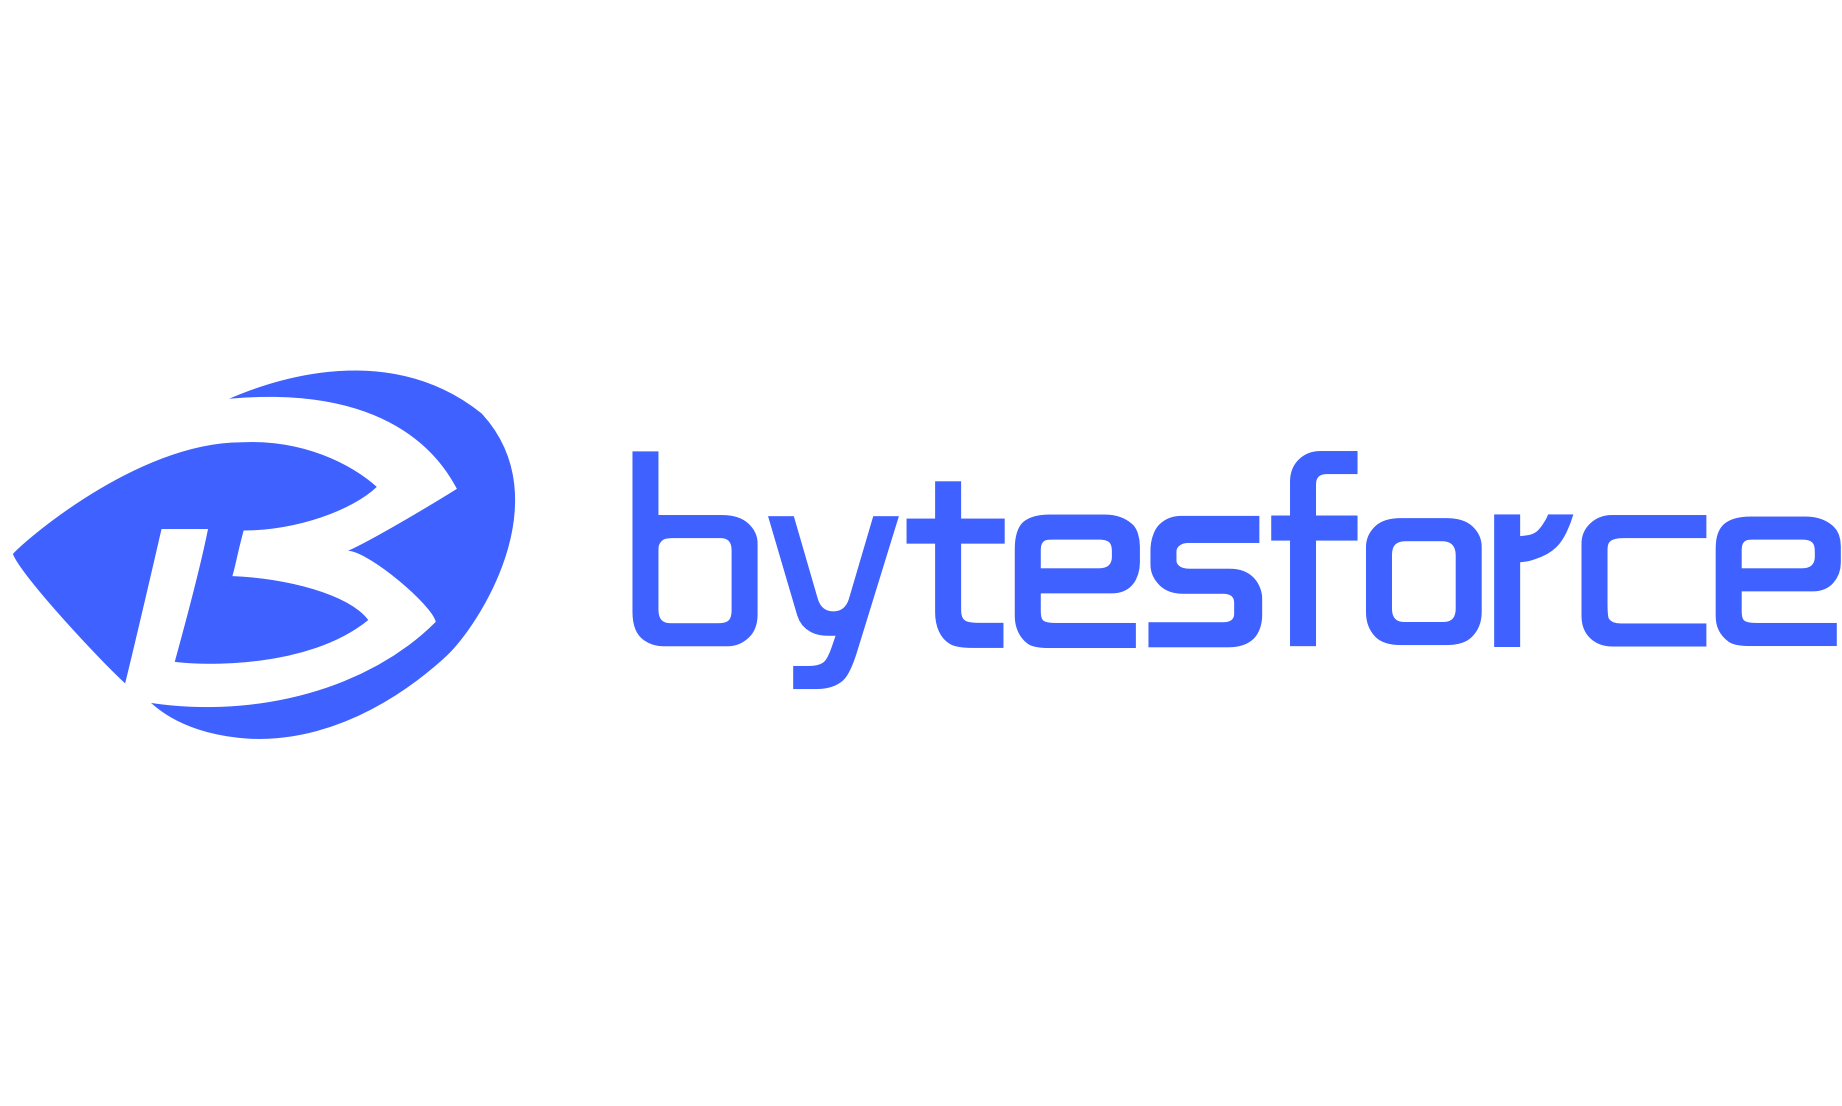 Bytesforce